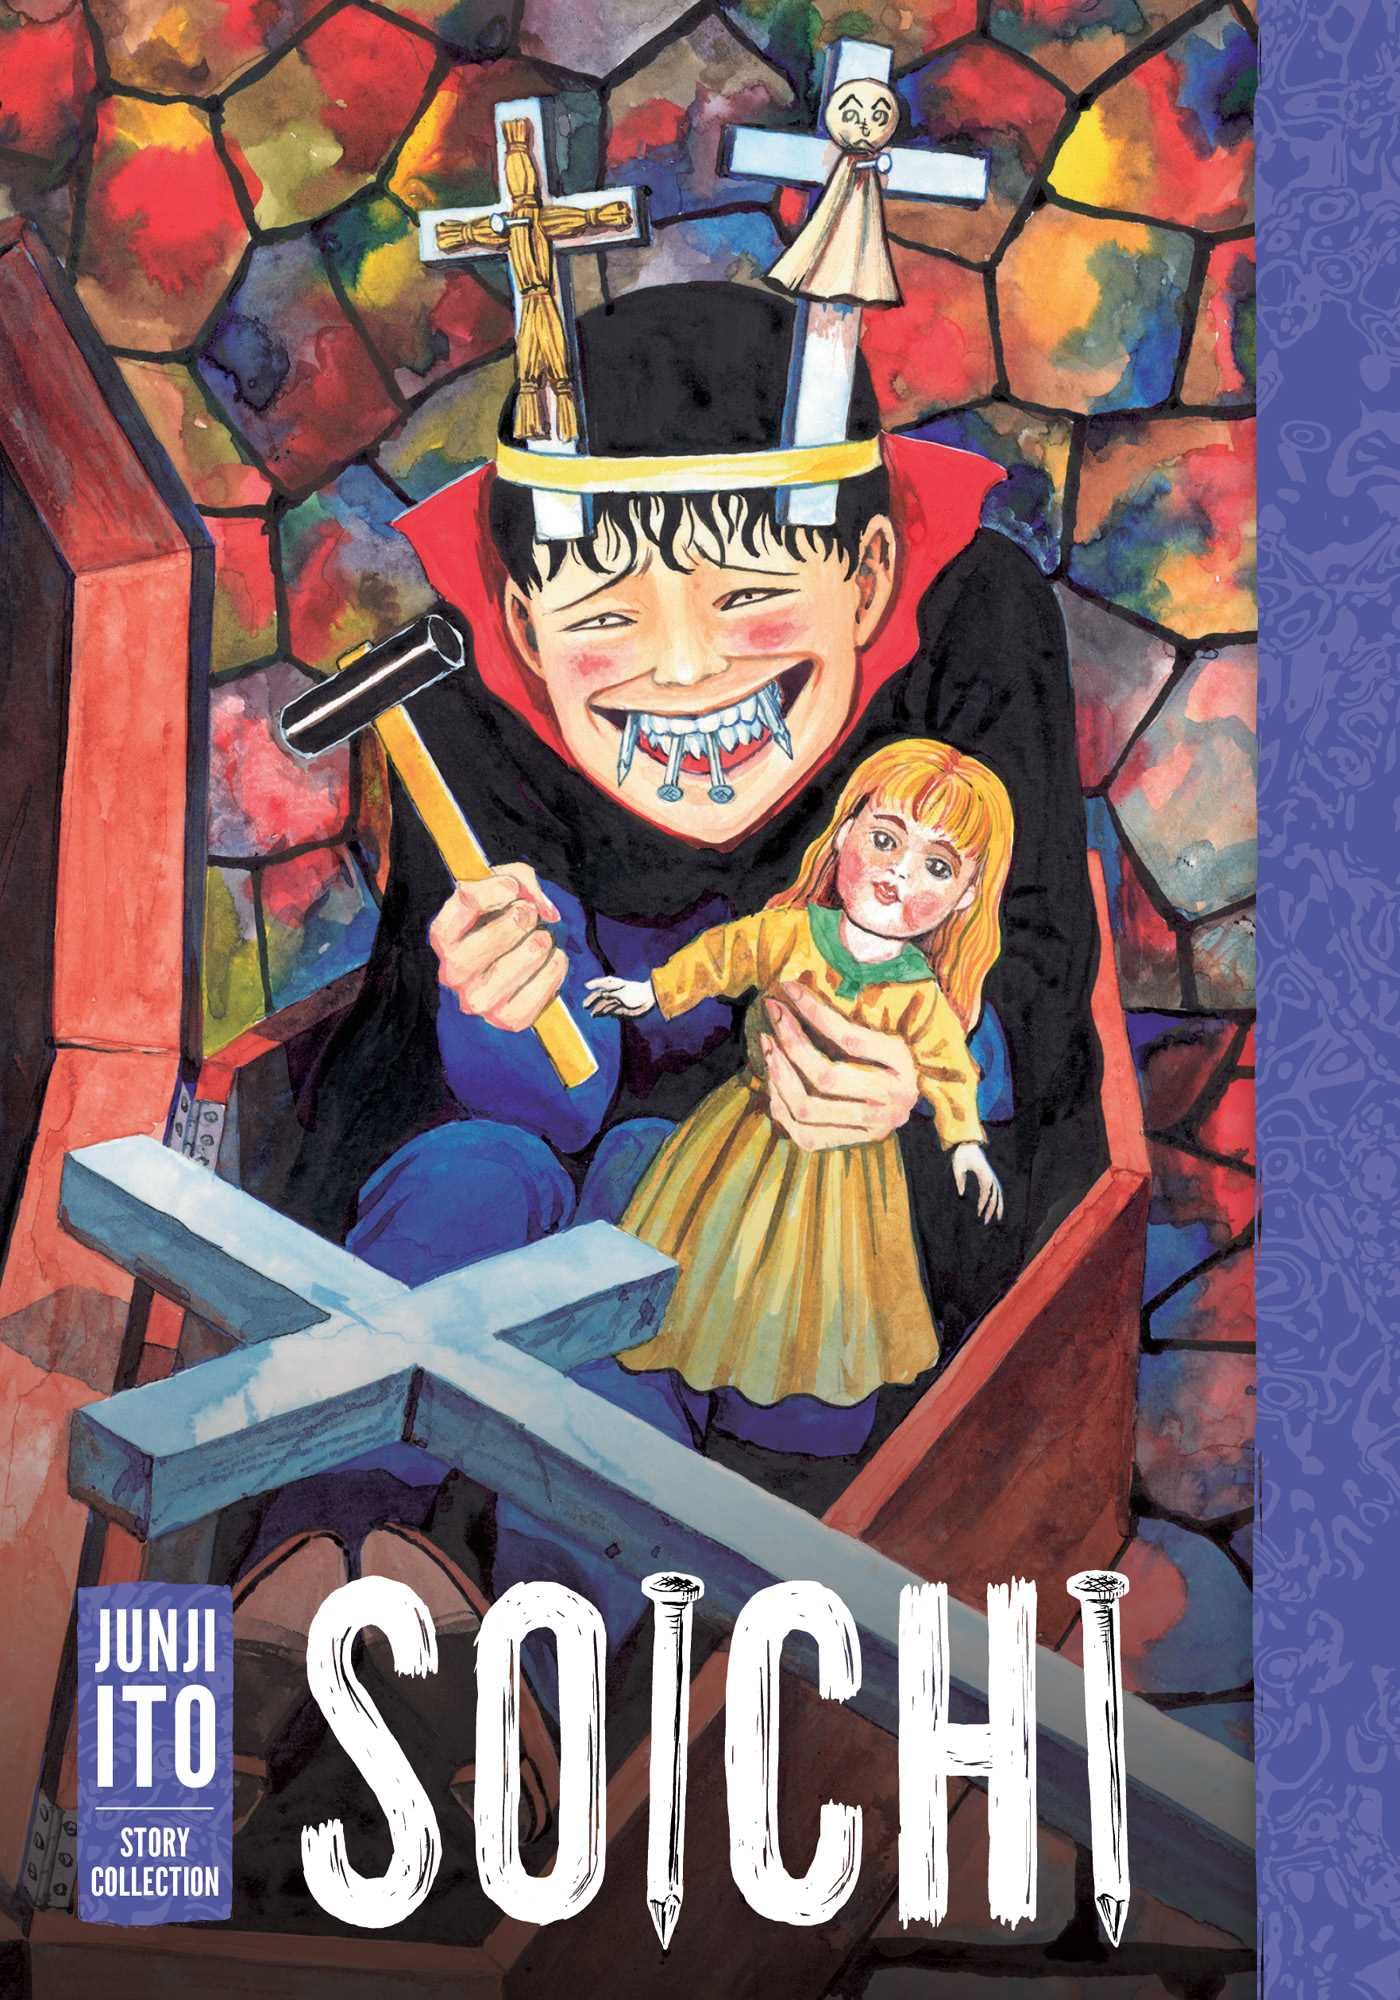 Soichi: Junji Ito Story Collection Manga Highlights One Creepy Kid